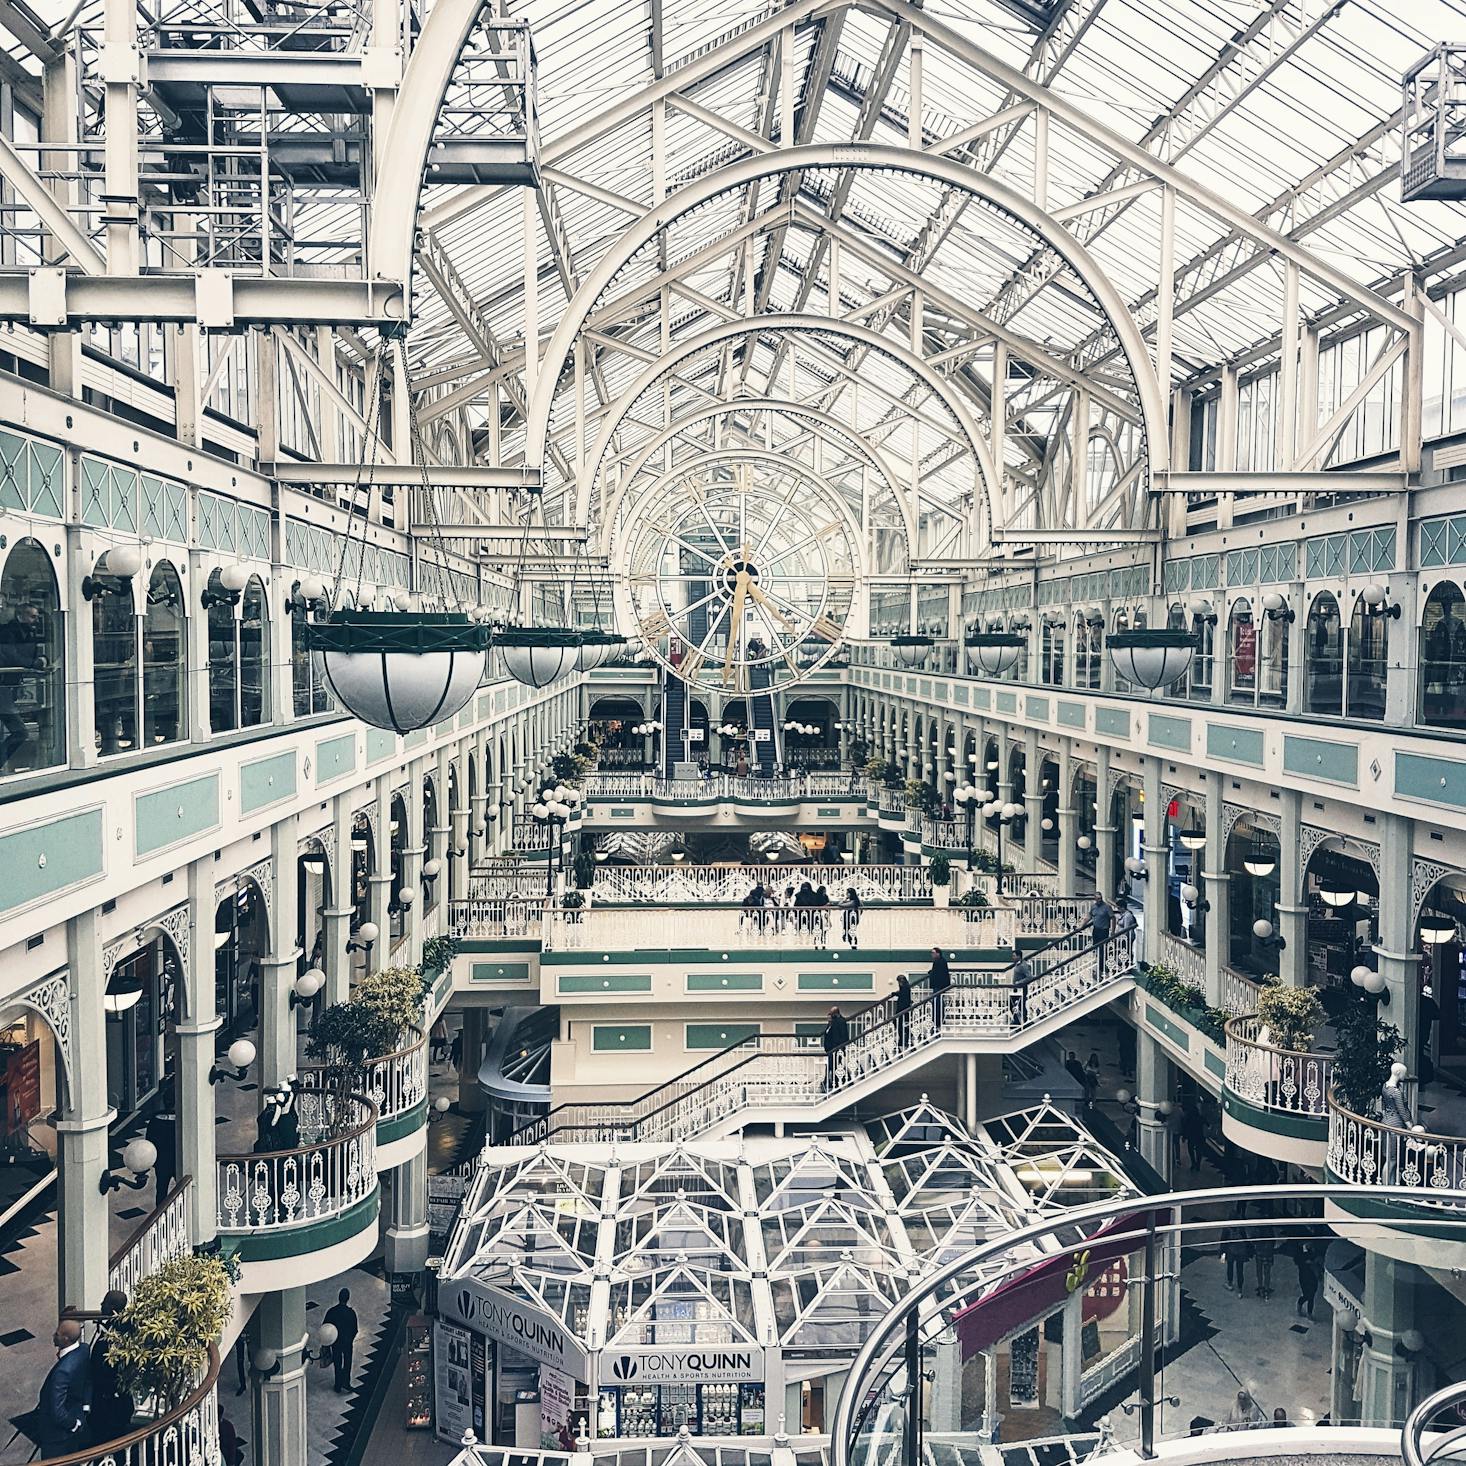 Shopping center in Dublin, Ireland